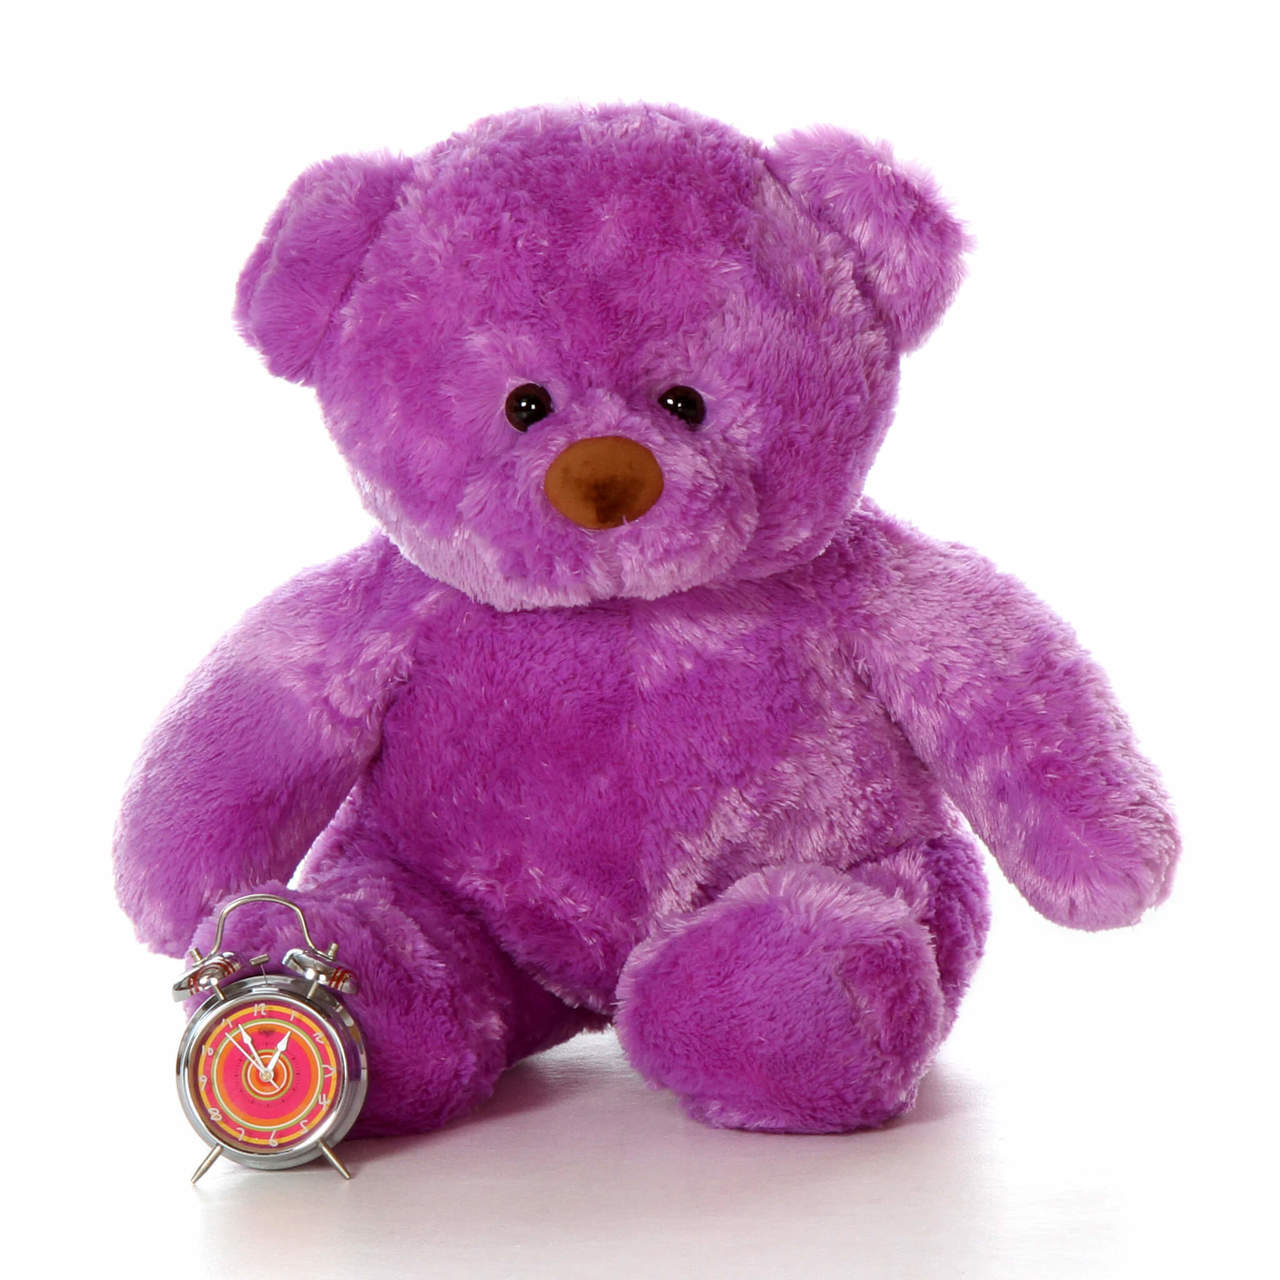 lilac teddy bear